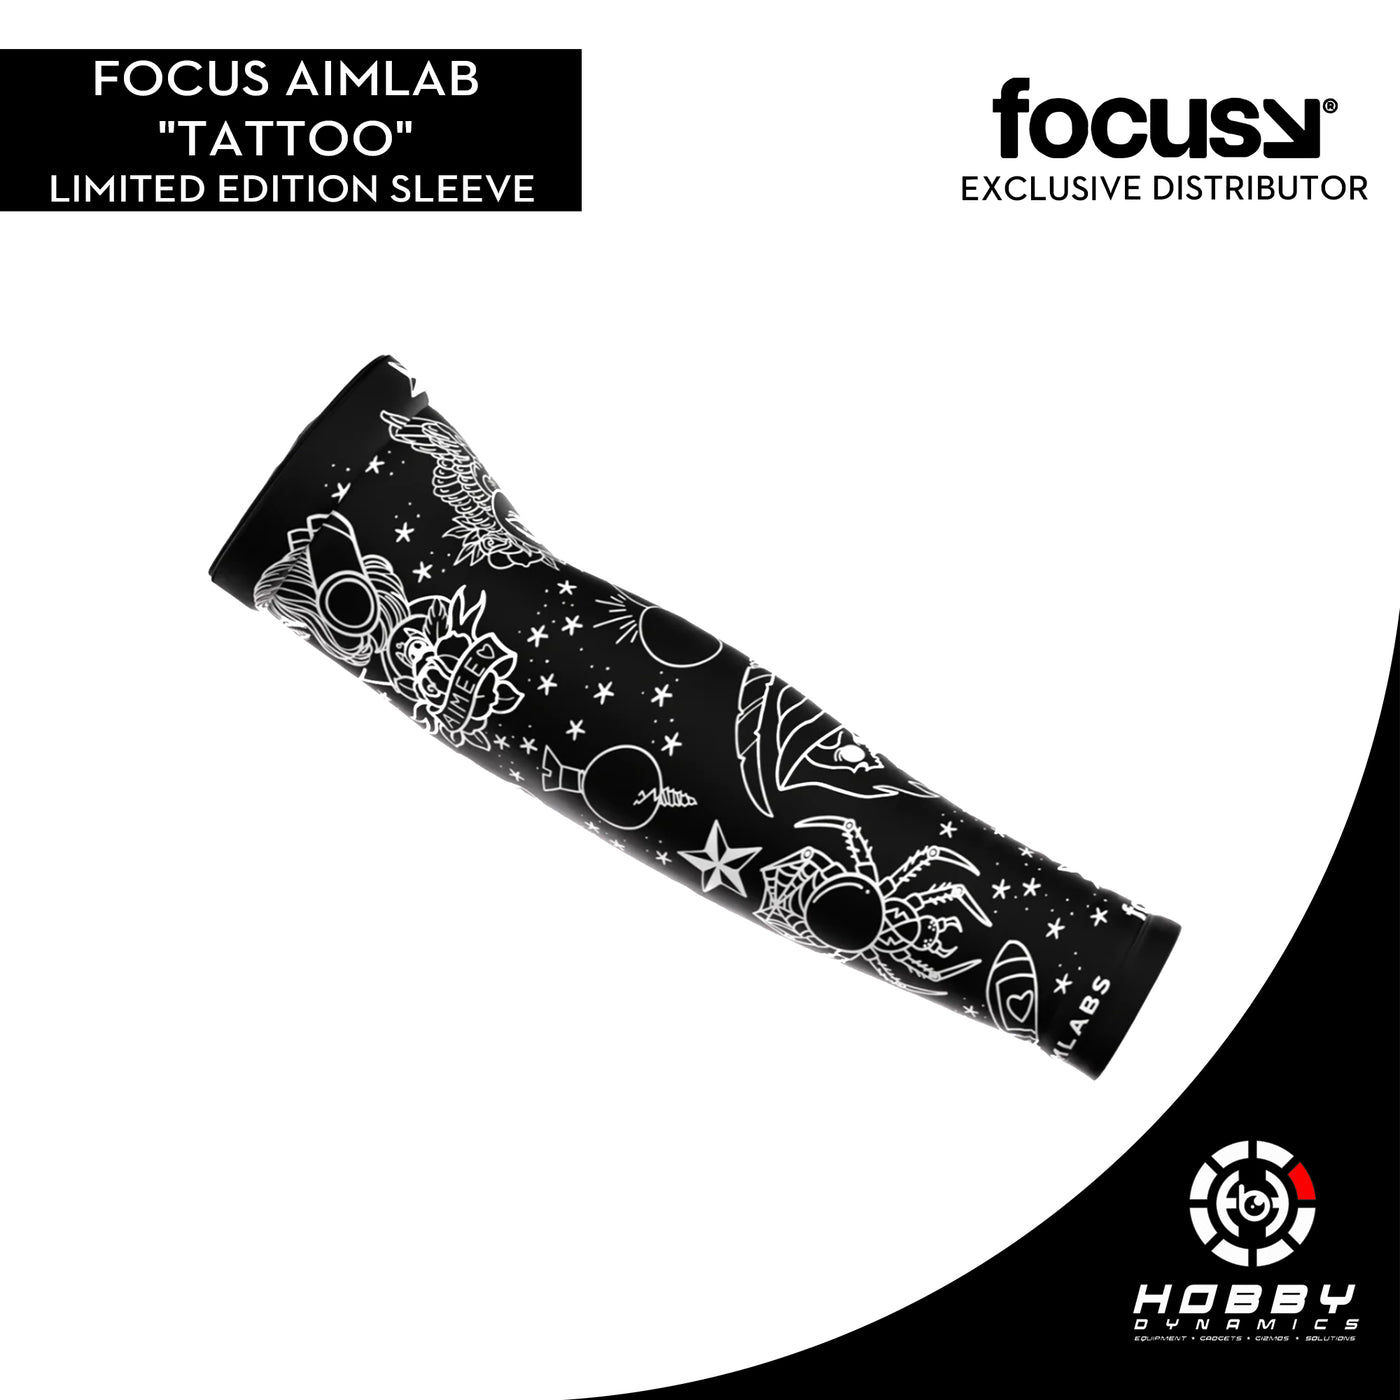 Focus x Aimlabs "Tattoo" Limited Edition Sleeve